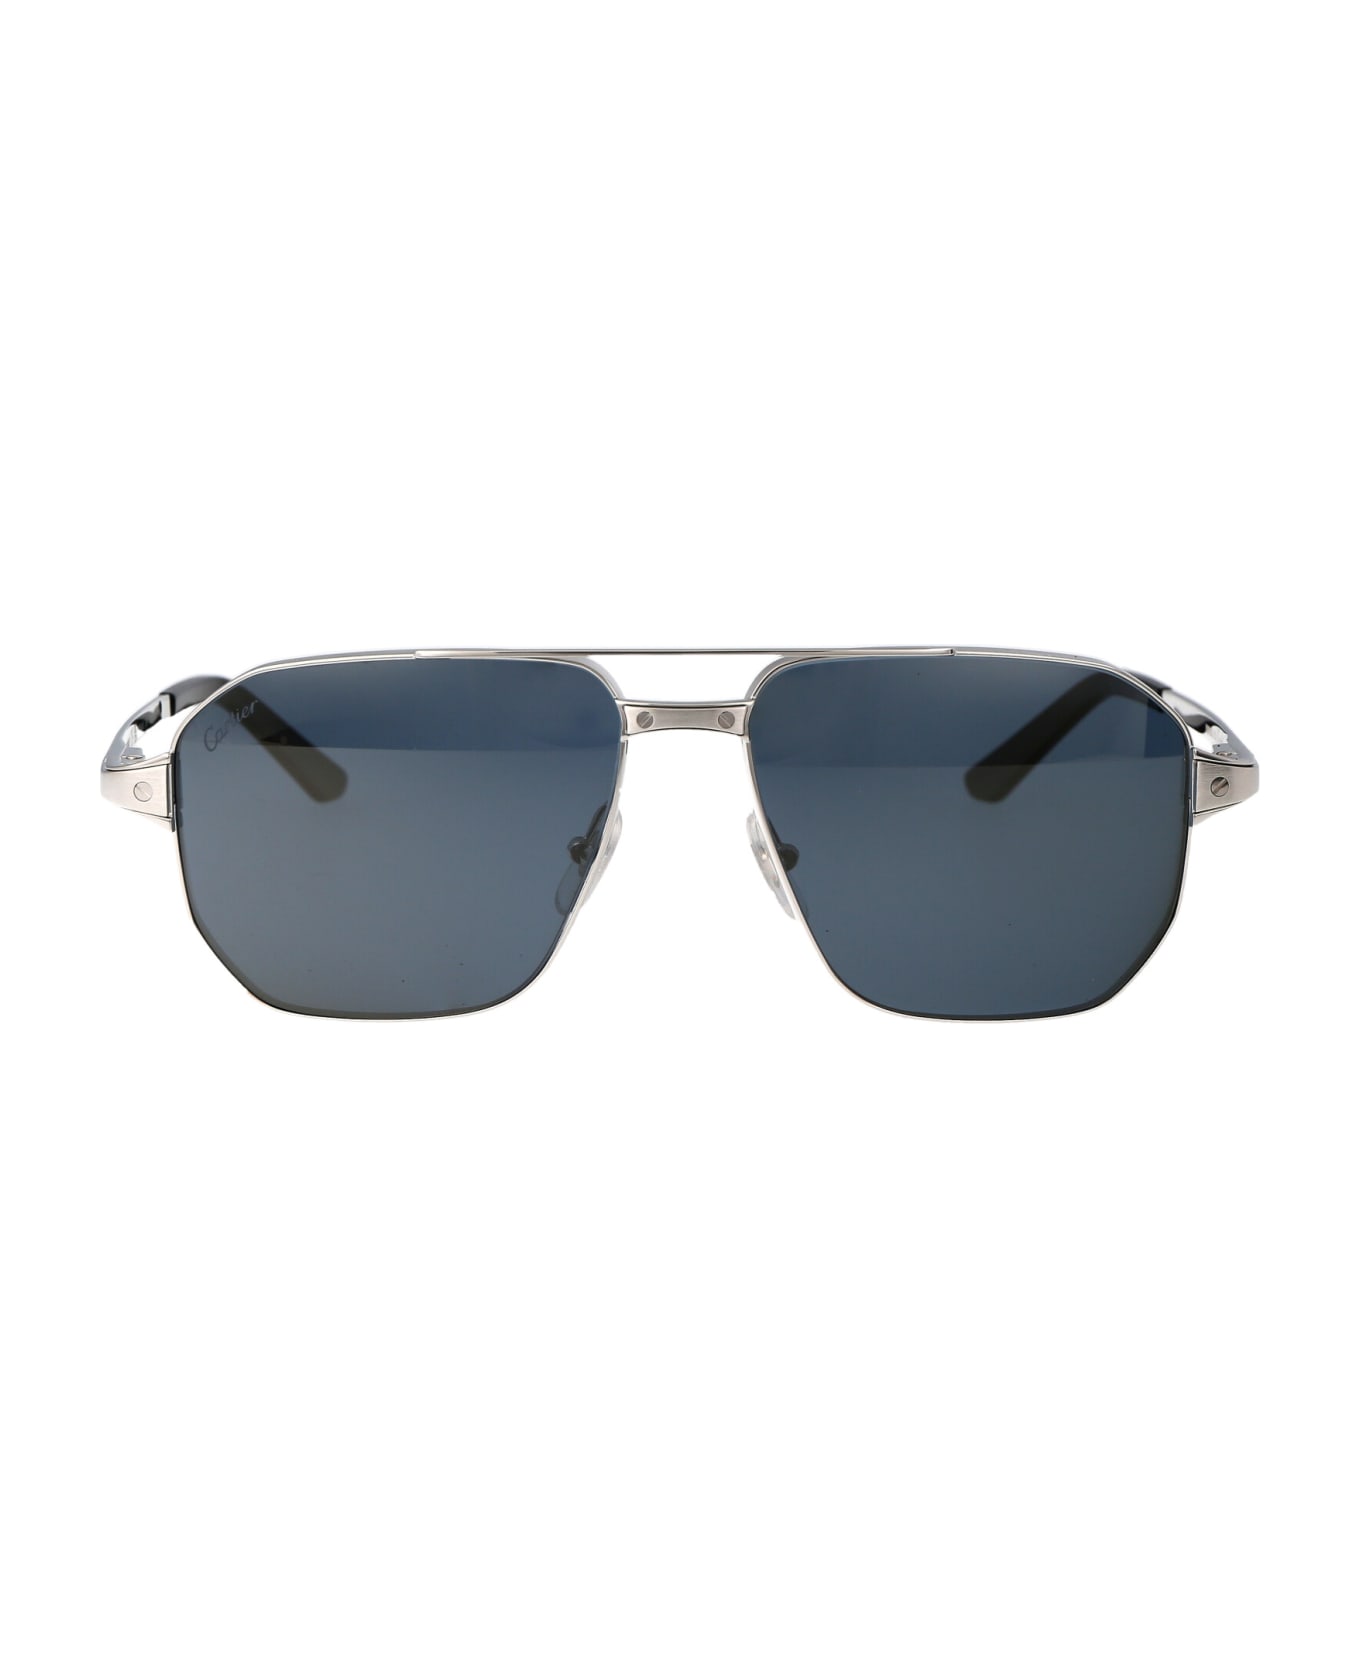 Cartier Eyewear Ct0424s Sunglasses - 004 SILVER SILVER BLUE サングラス